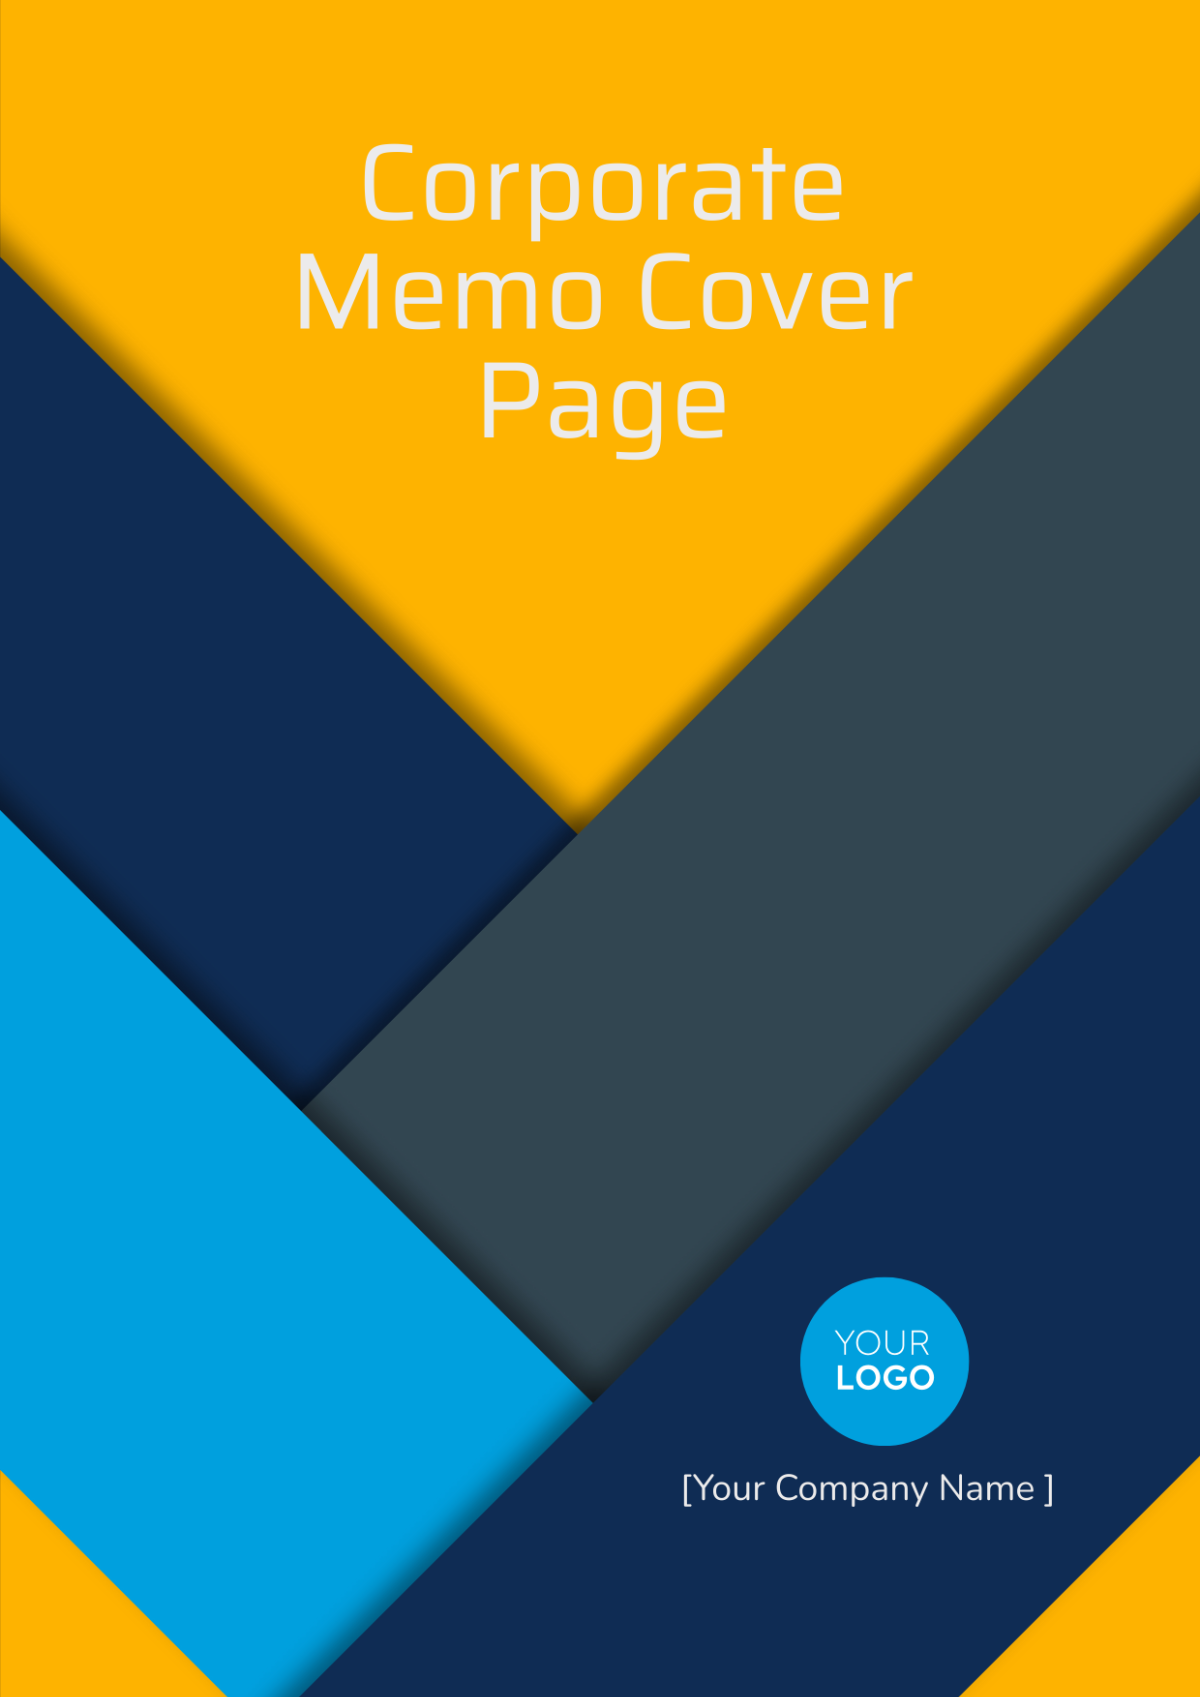 Corporate Memo Cover Page